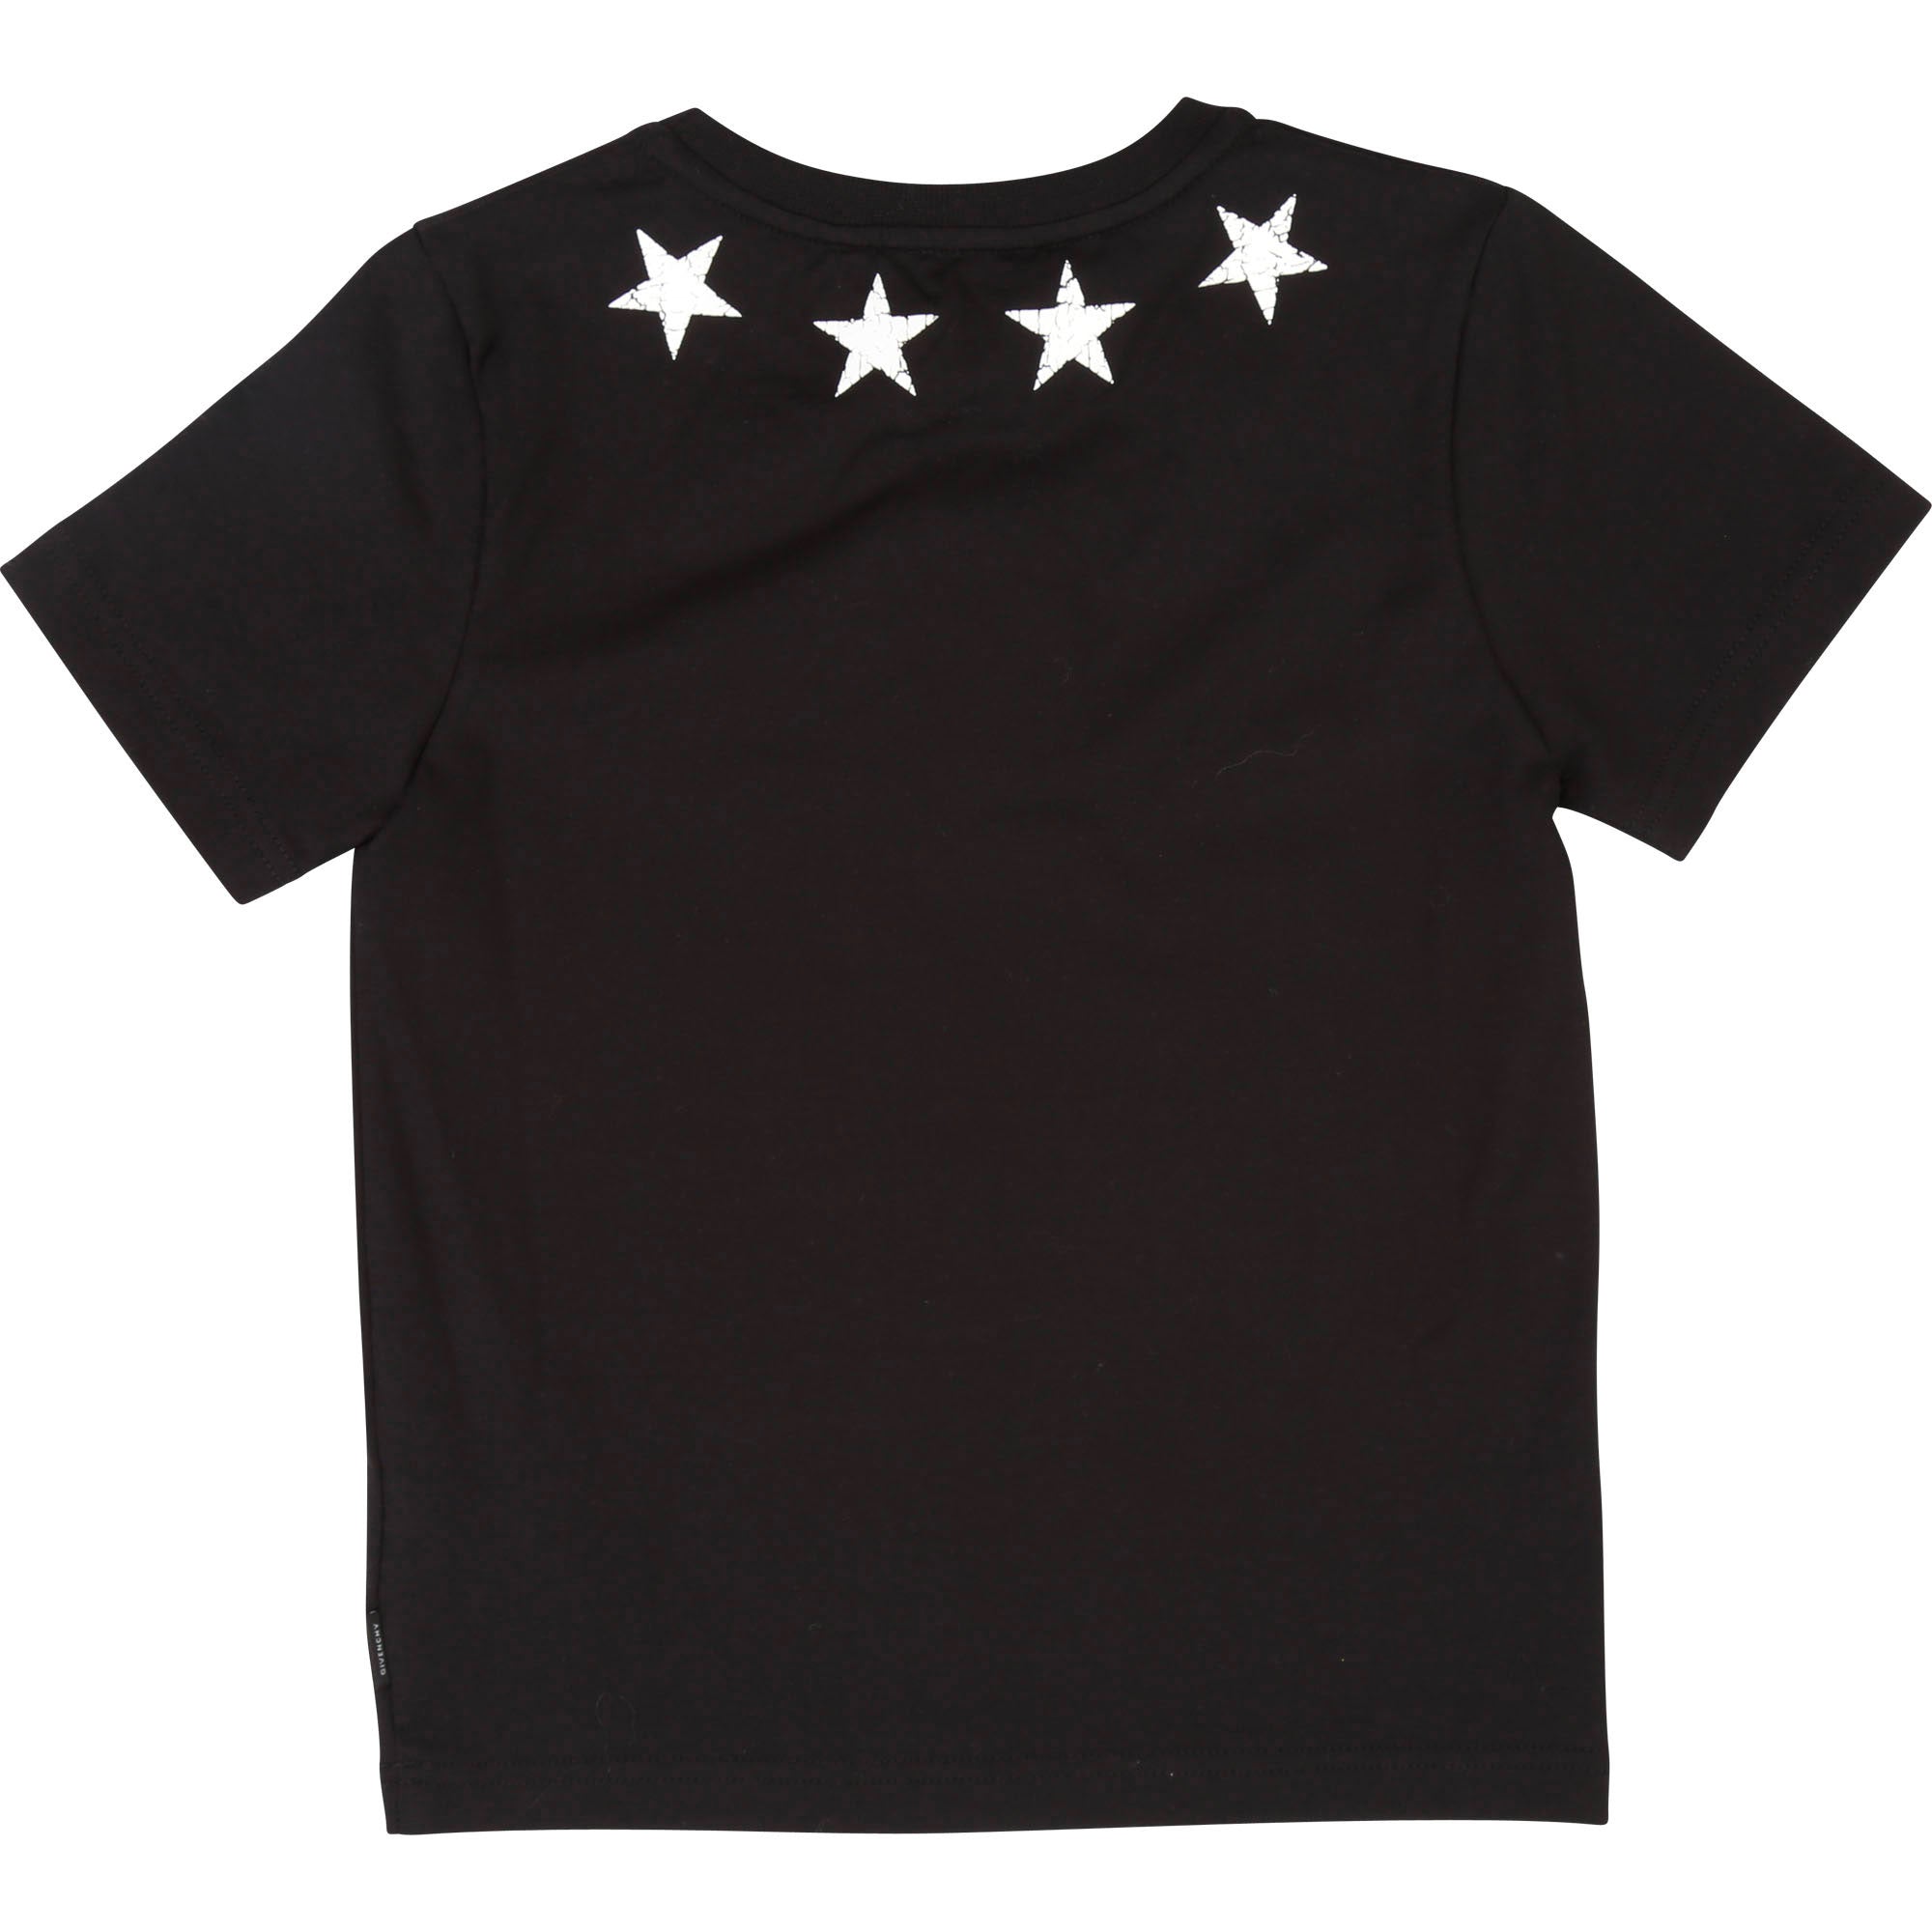 Boys Black Star Cotton T-shirt